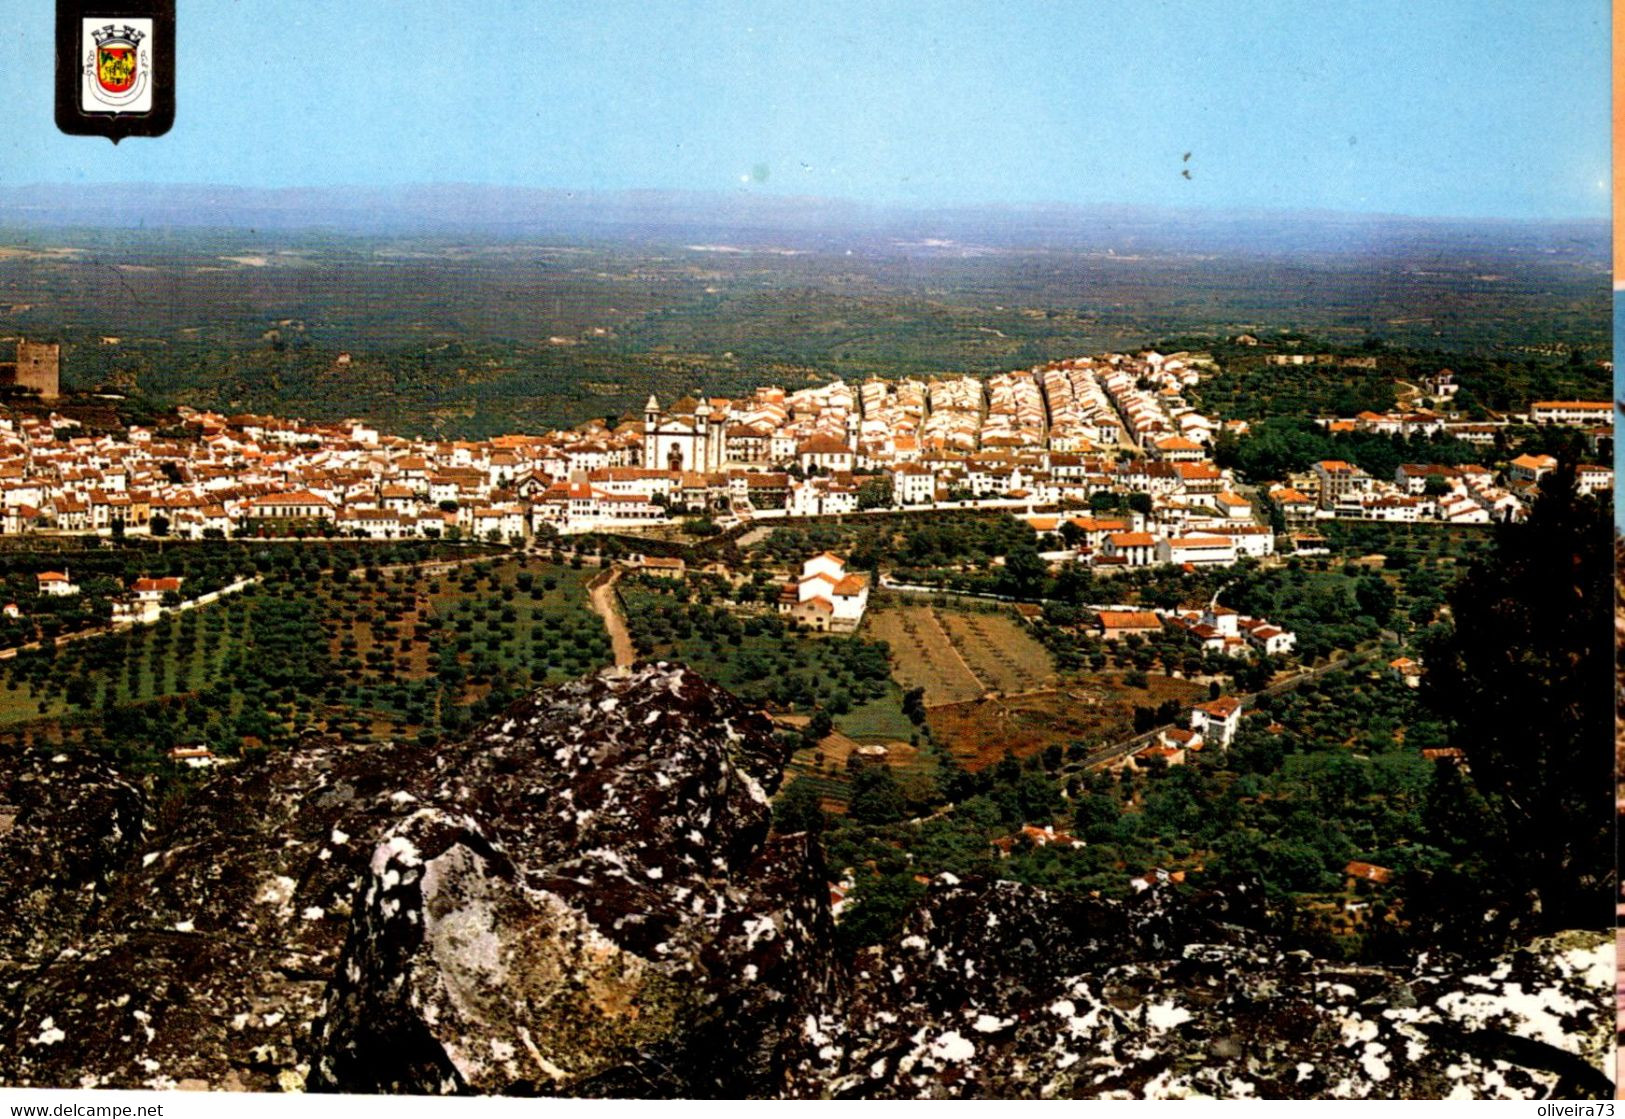 CASTELO DE VIDE - Vista Geral - PORTUGAL - Portalegre